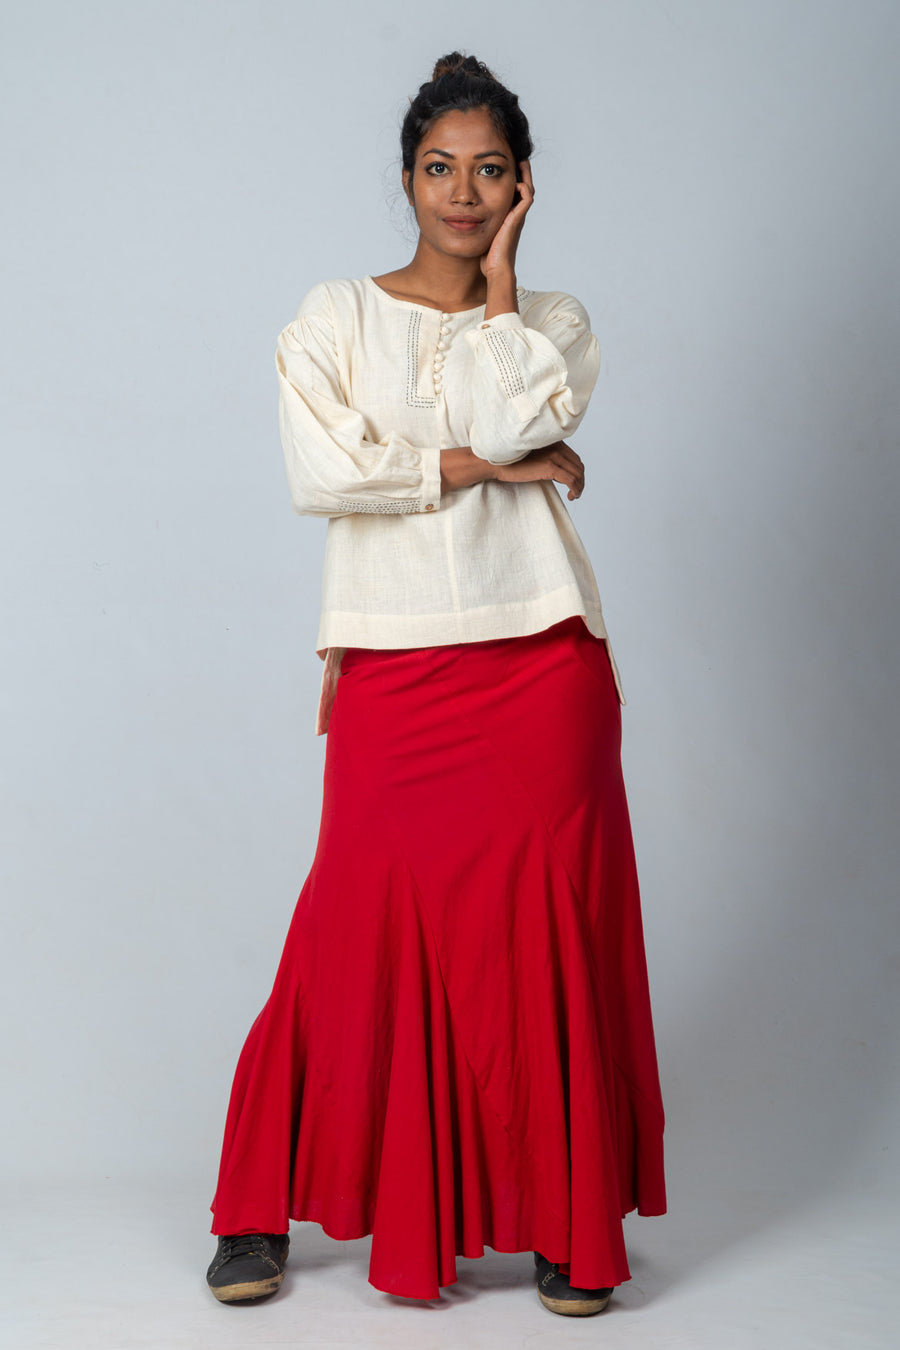 Off-White Organic Cotton Top with Red Kakoli Skirt- DHRUTI SET